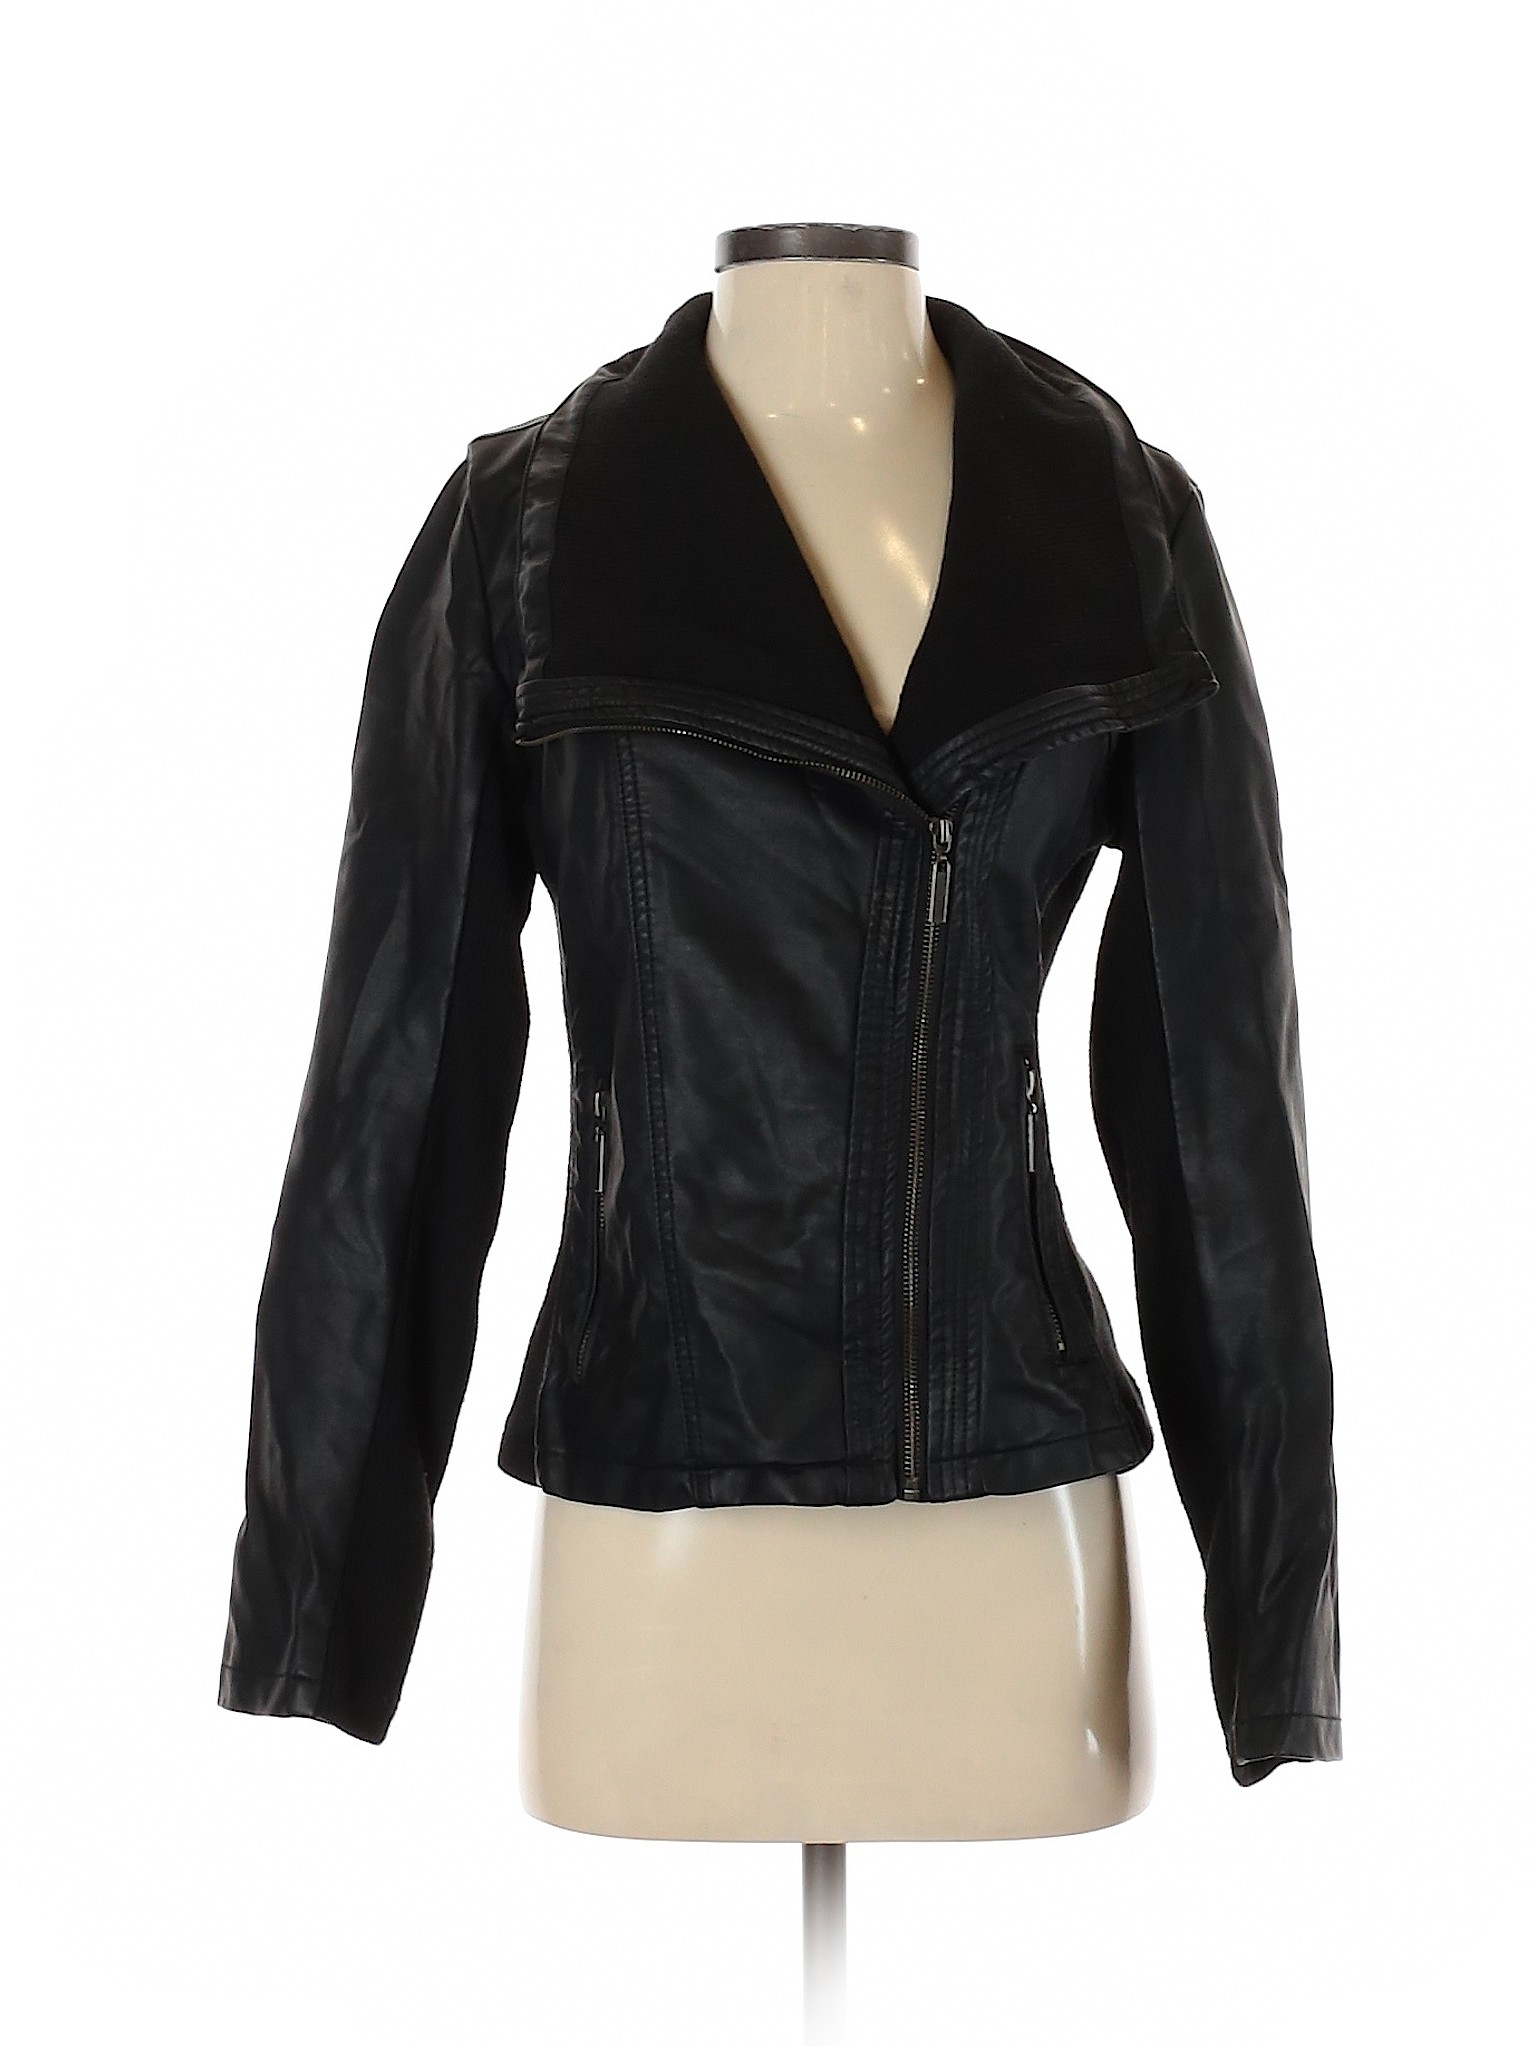 Mossimo Women Black Faux Leather Jacket Sm | eBay